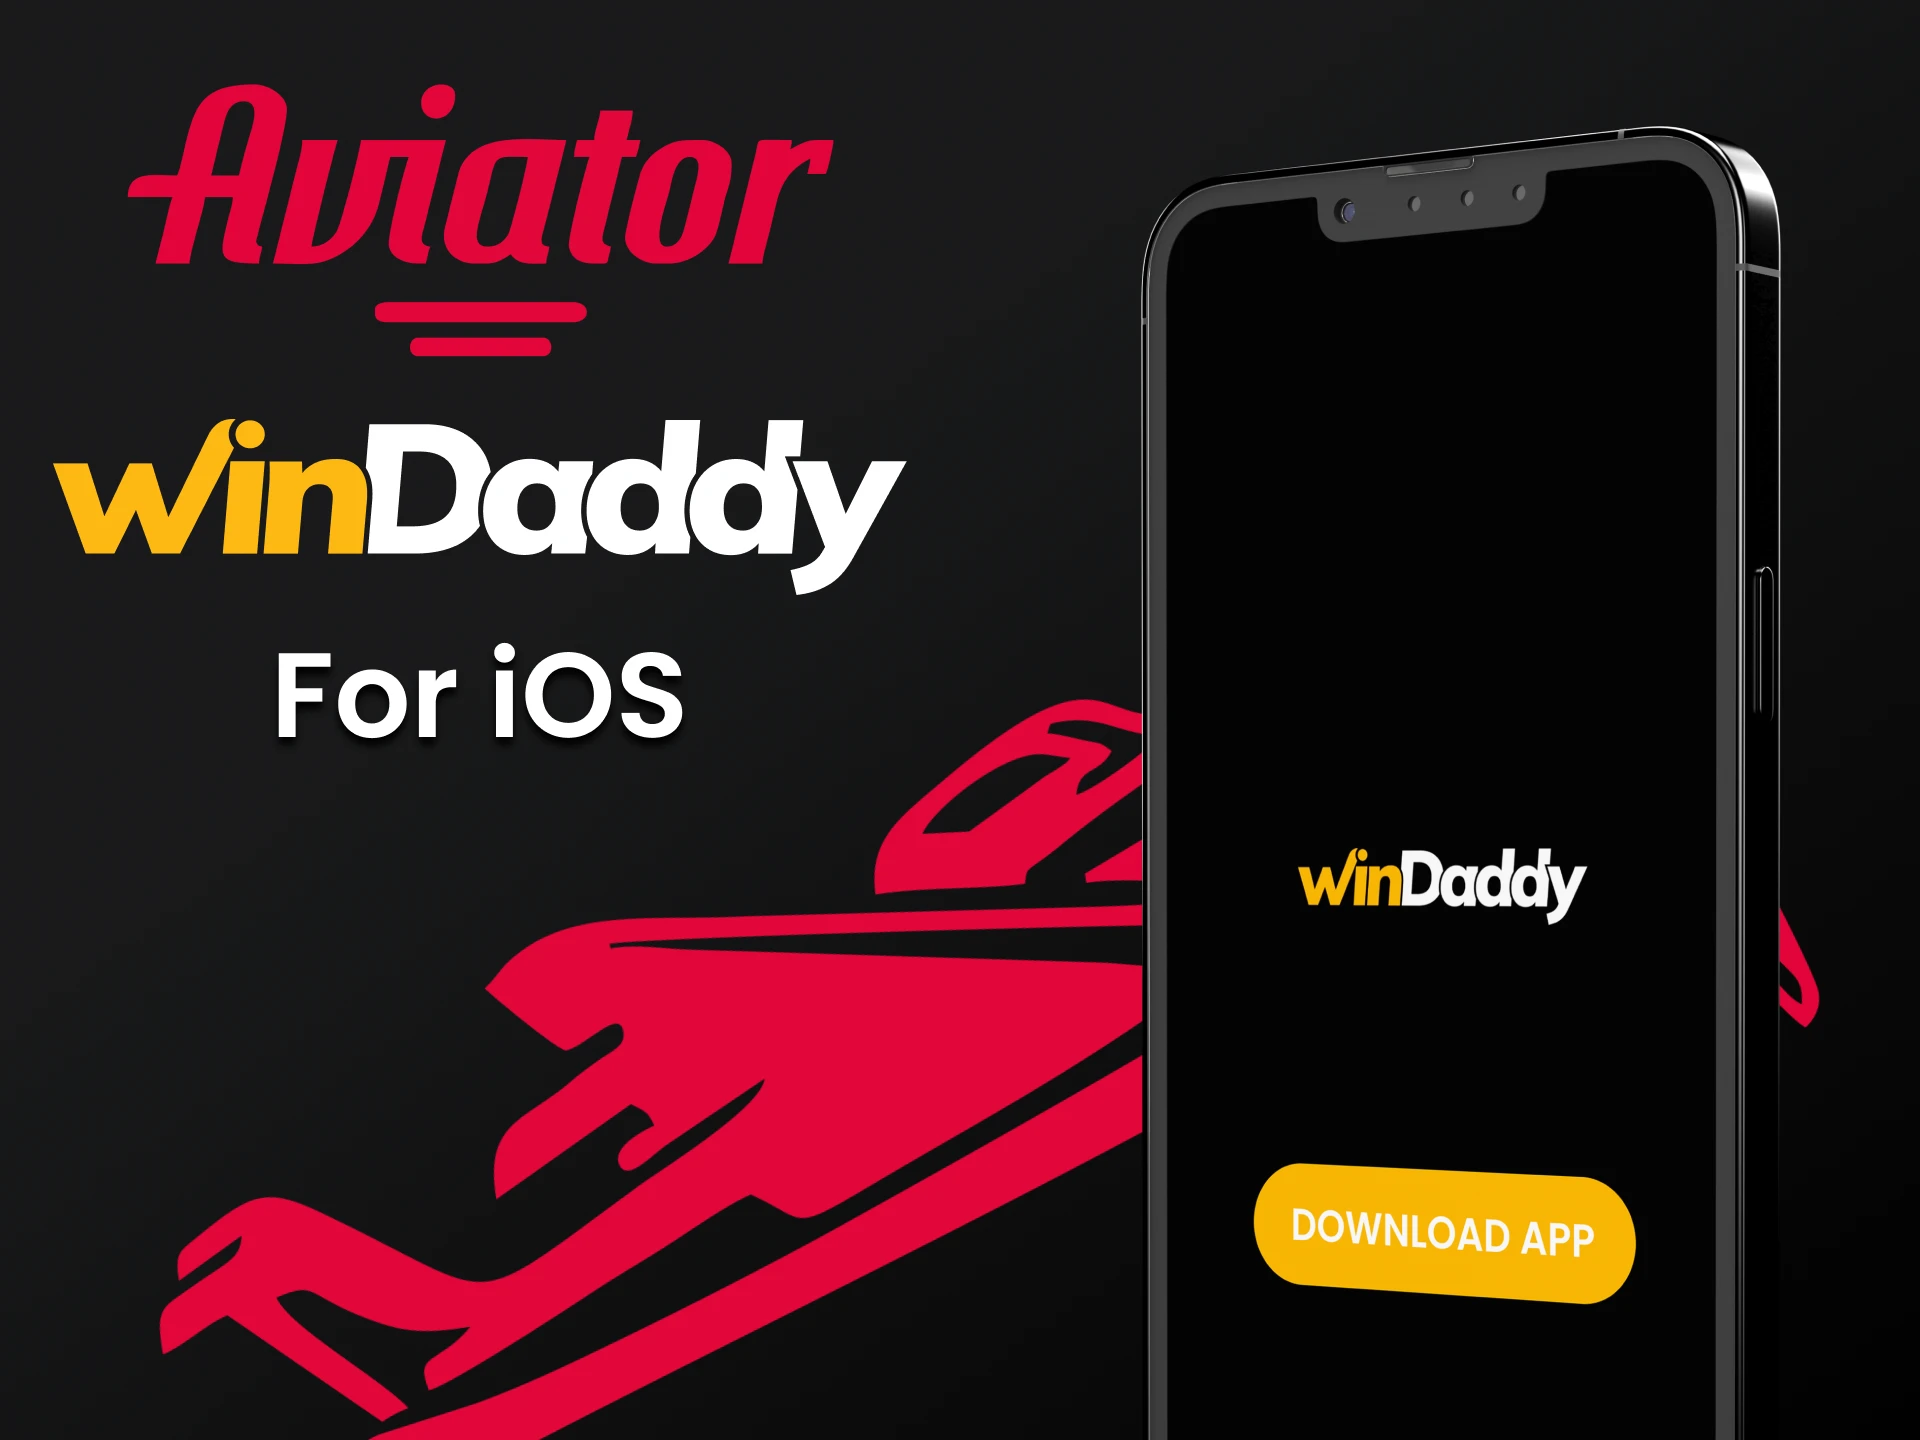 Baixe o aplicativo WinDaddy para iOS para jogar Aviator.